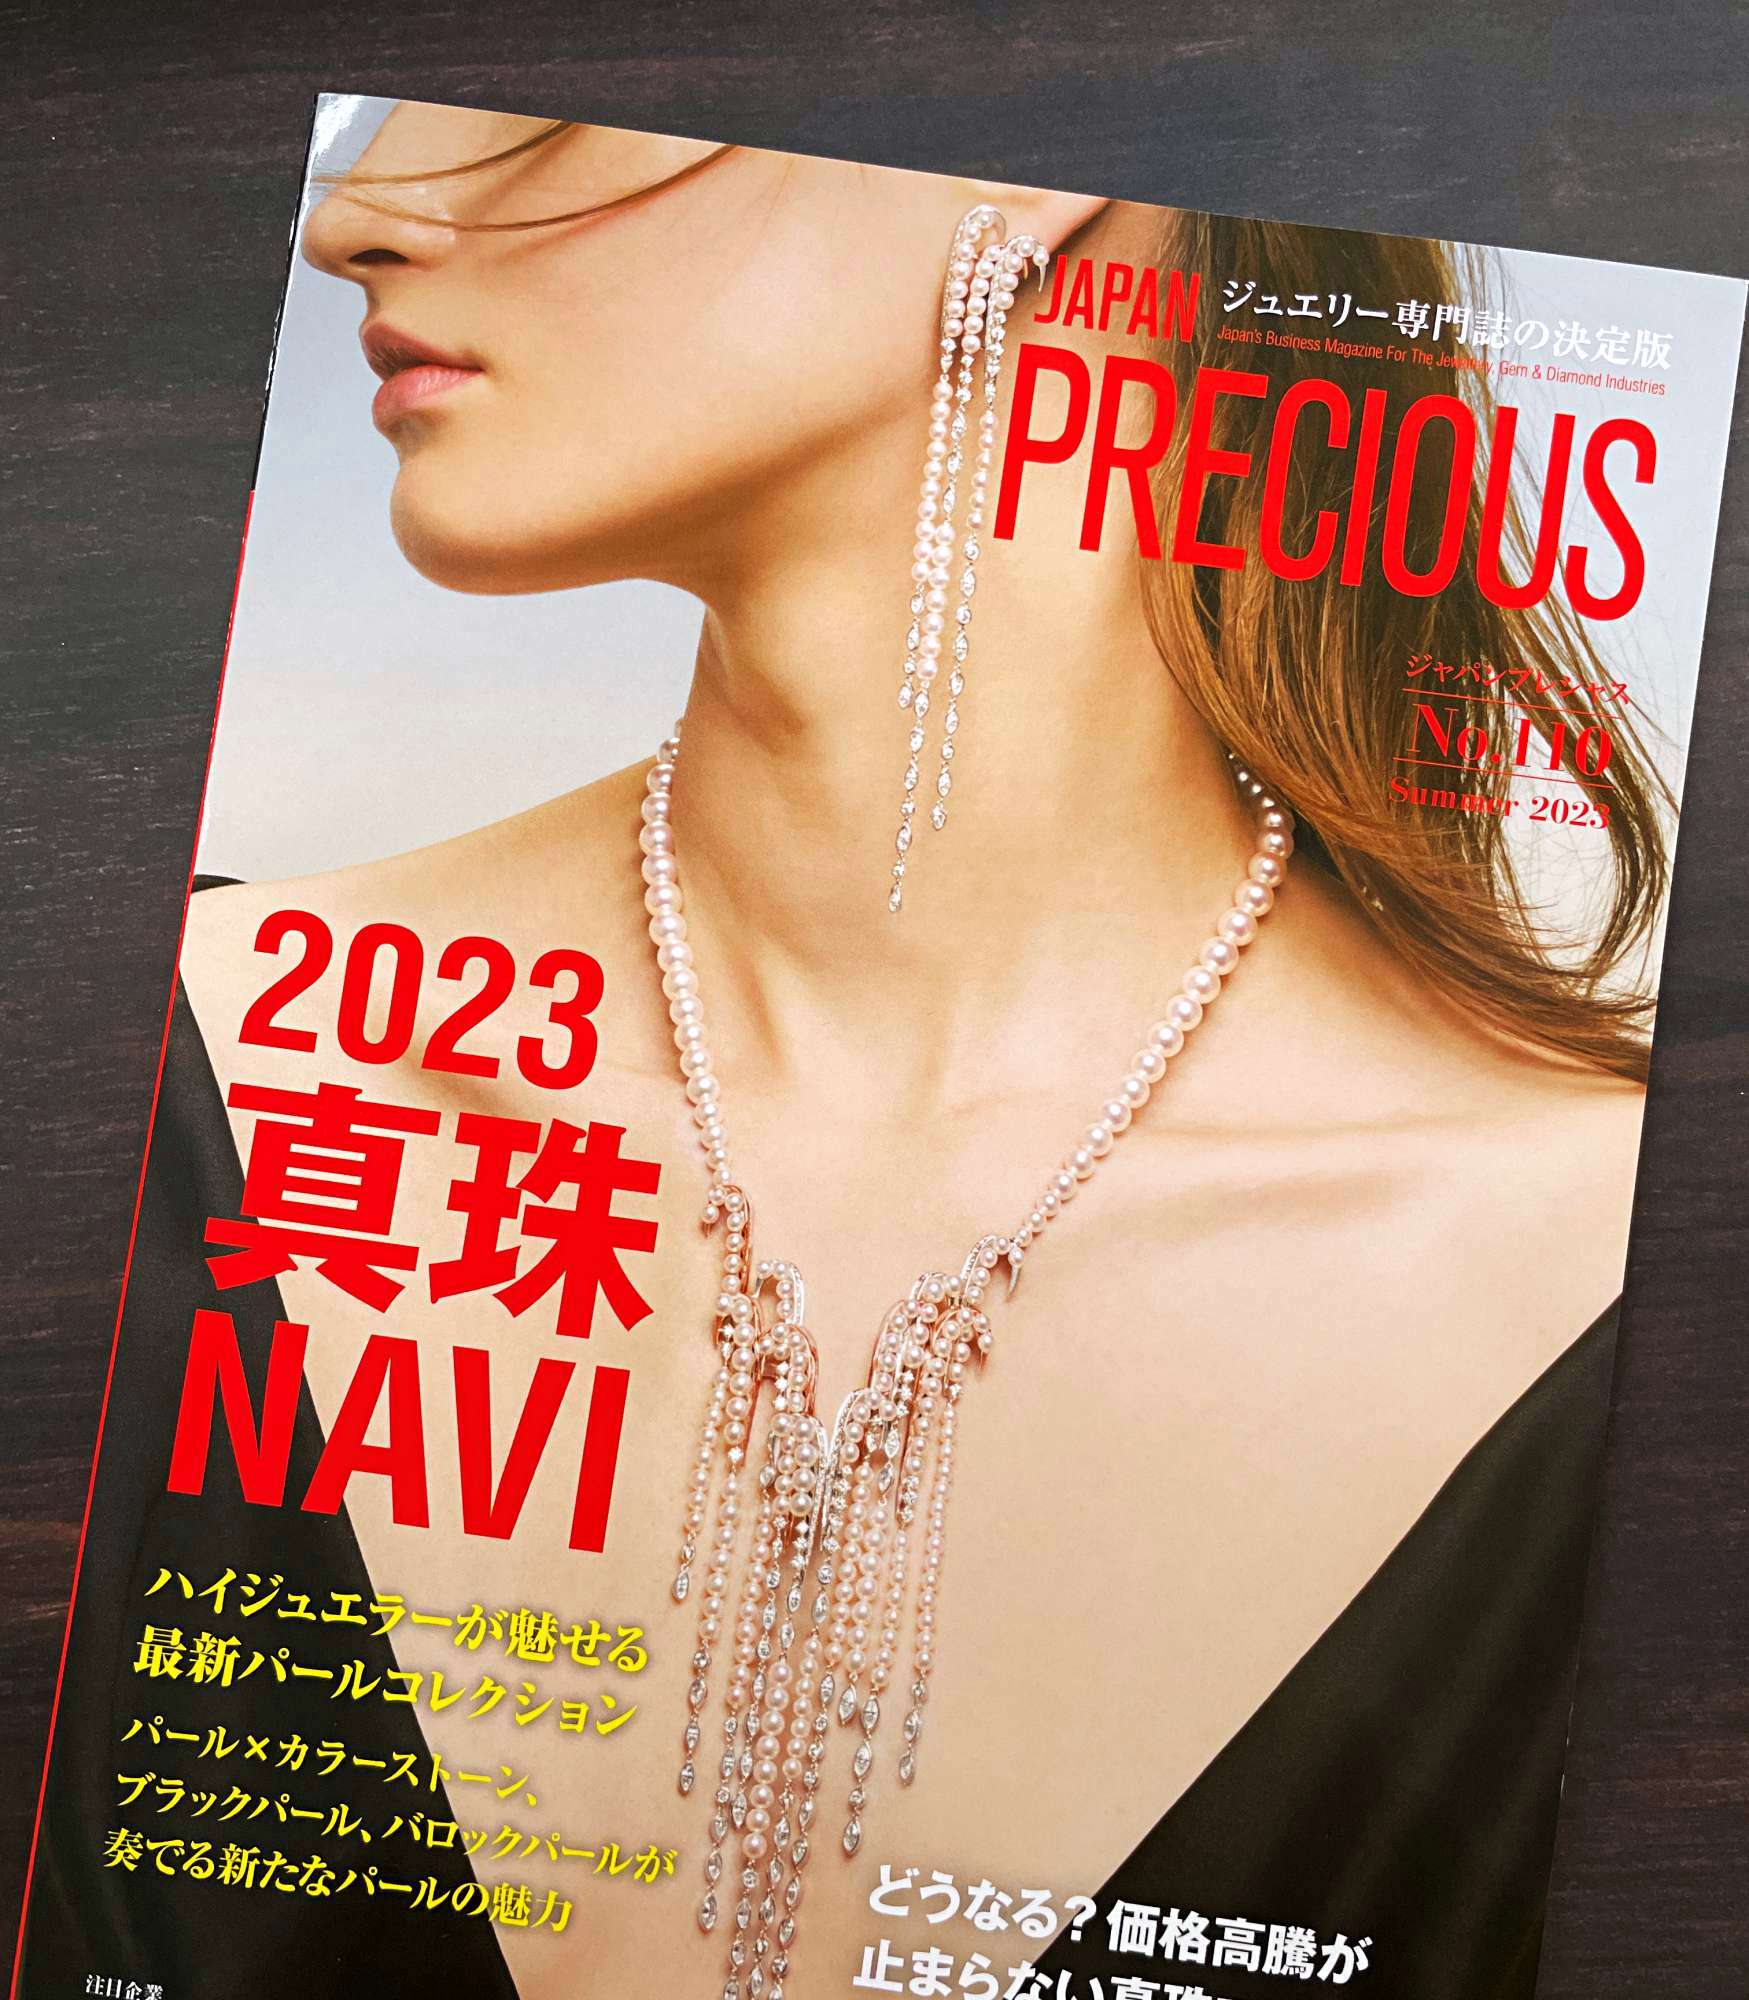 Pearl for Life》雑誌「JAPAN PRECIOUS」に掲載されました～真珠NAVI ...